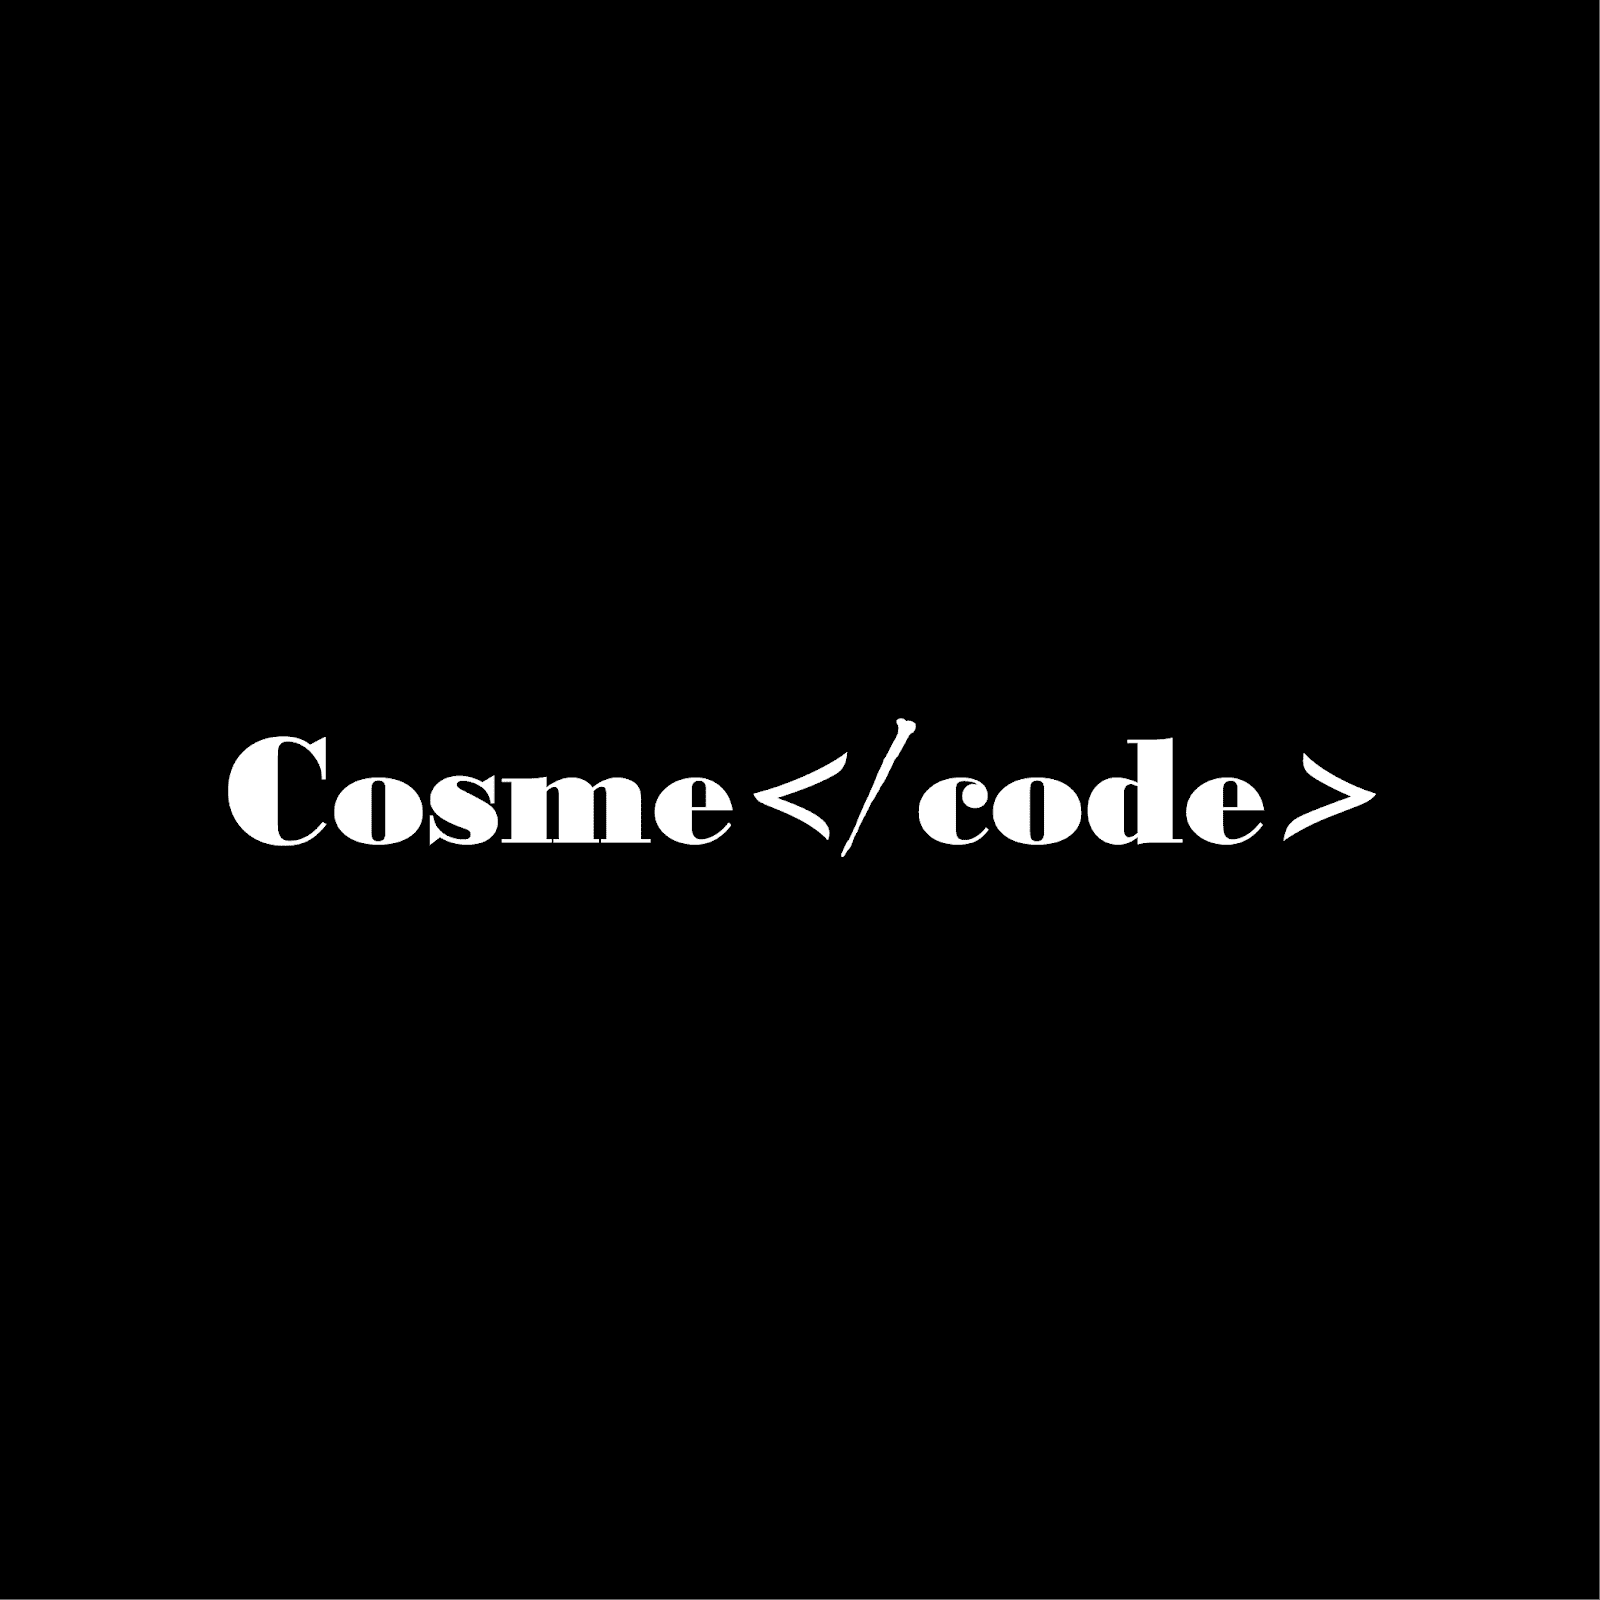 Cosmecode - Crunchbase Company Profile & Funding